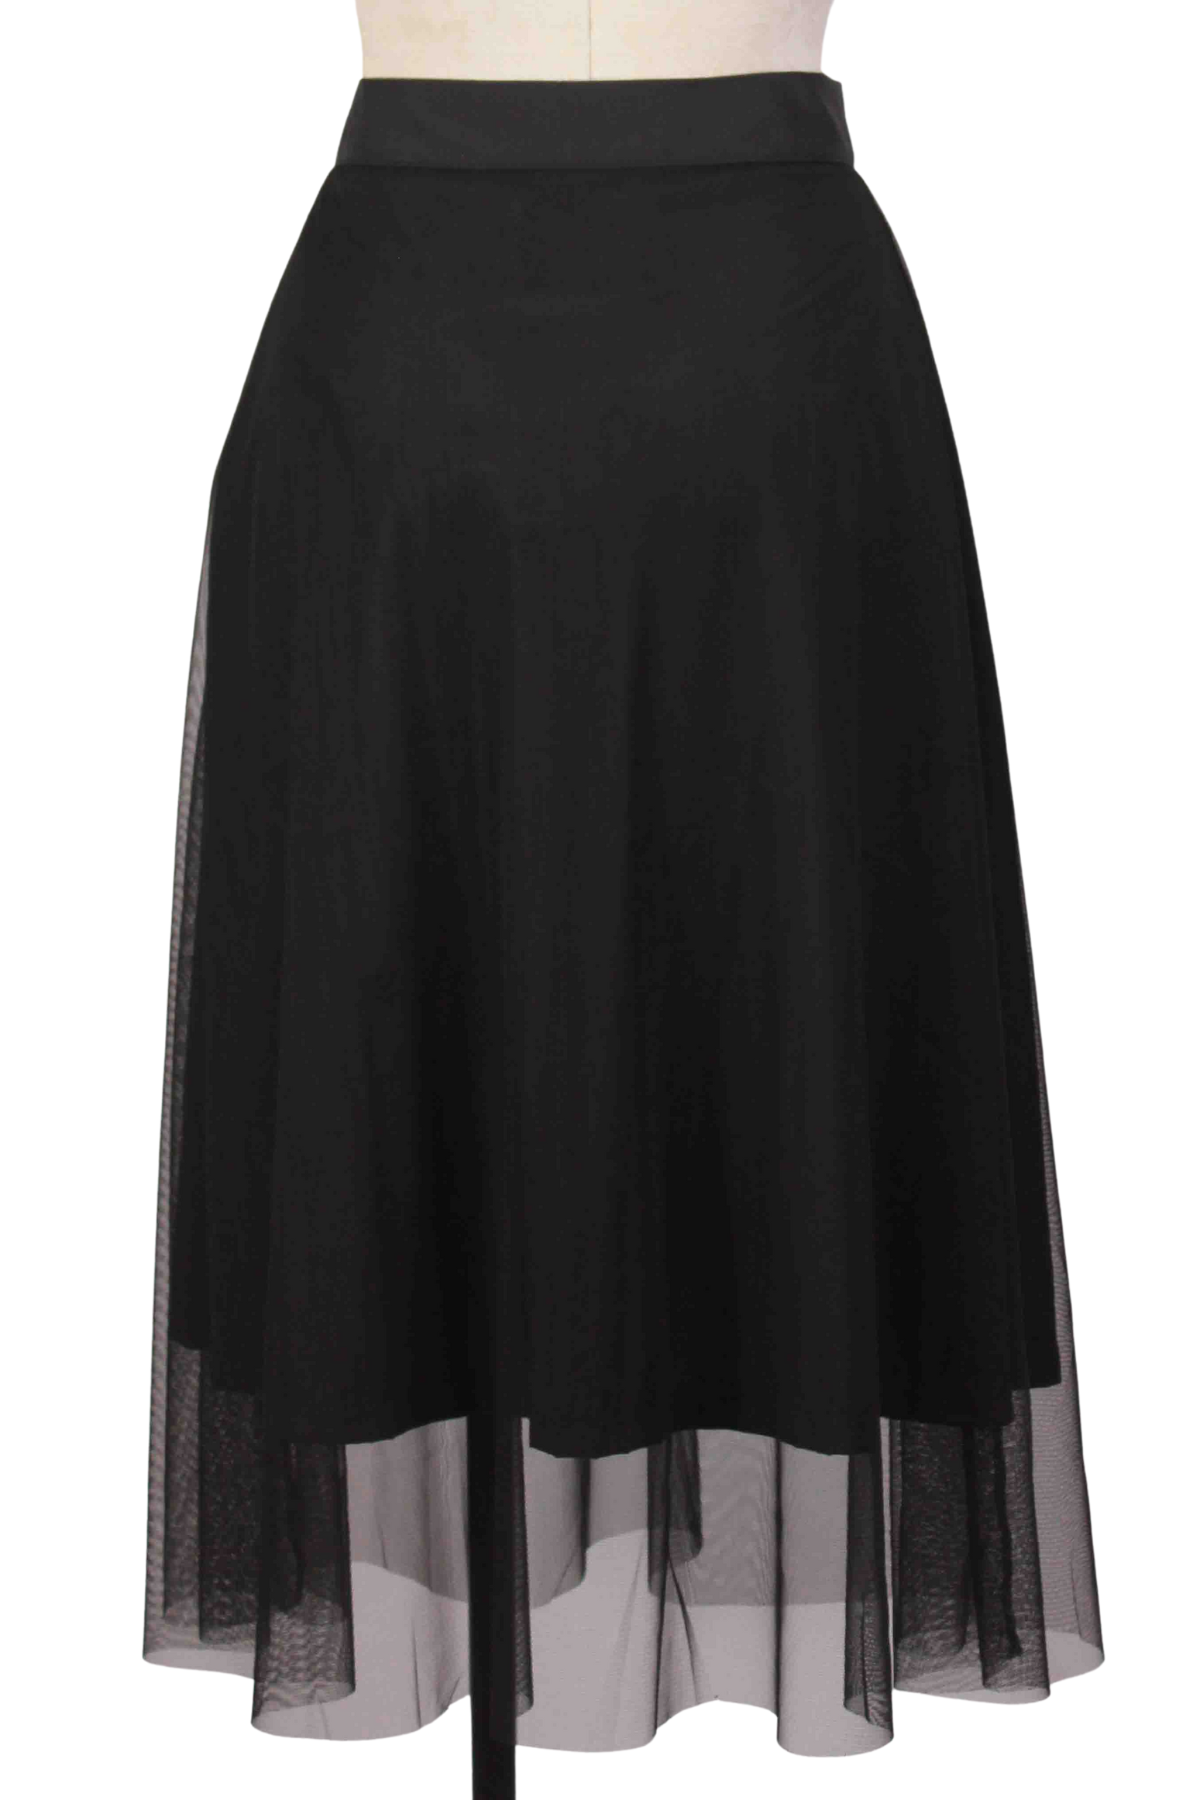 back view of Black Mesh A Line Asia Skirt by Kozan